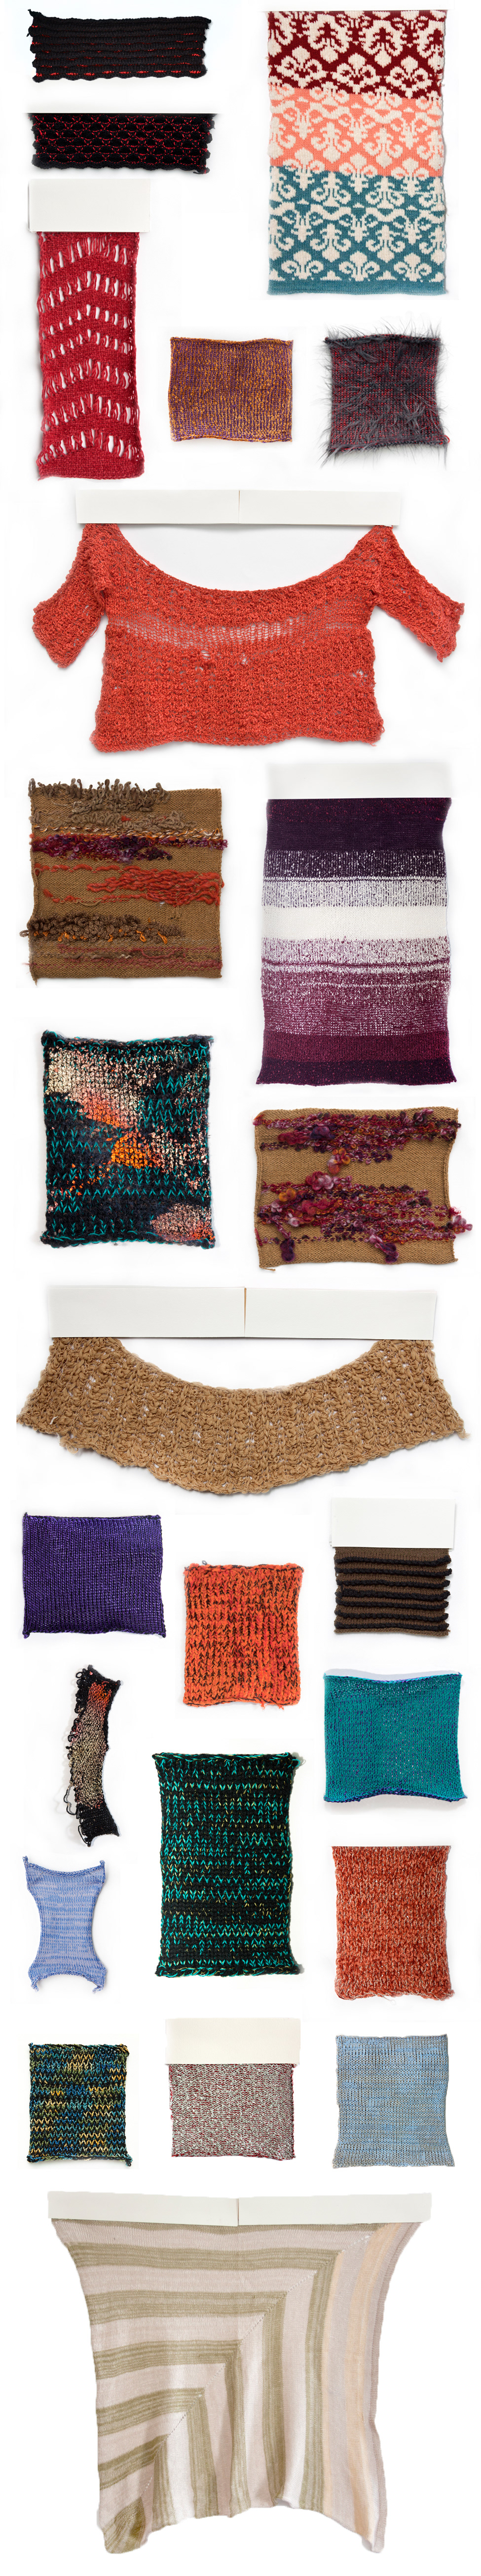 knitting knit Textiles